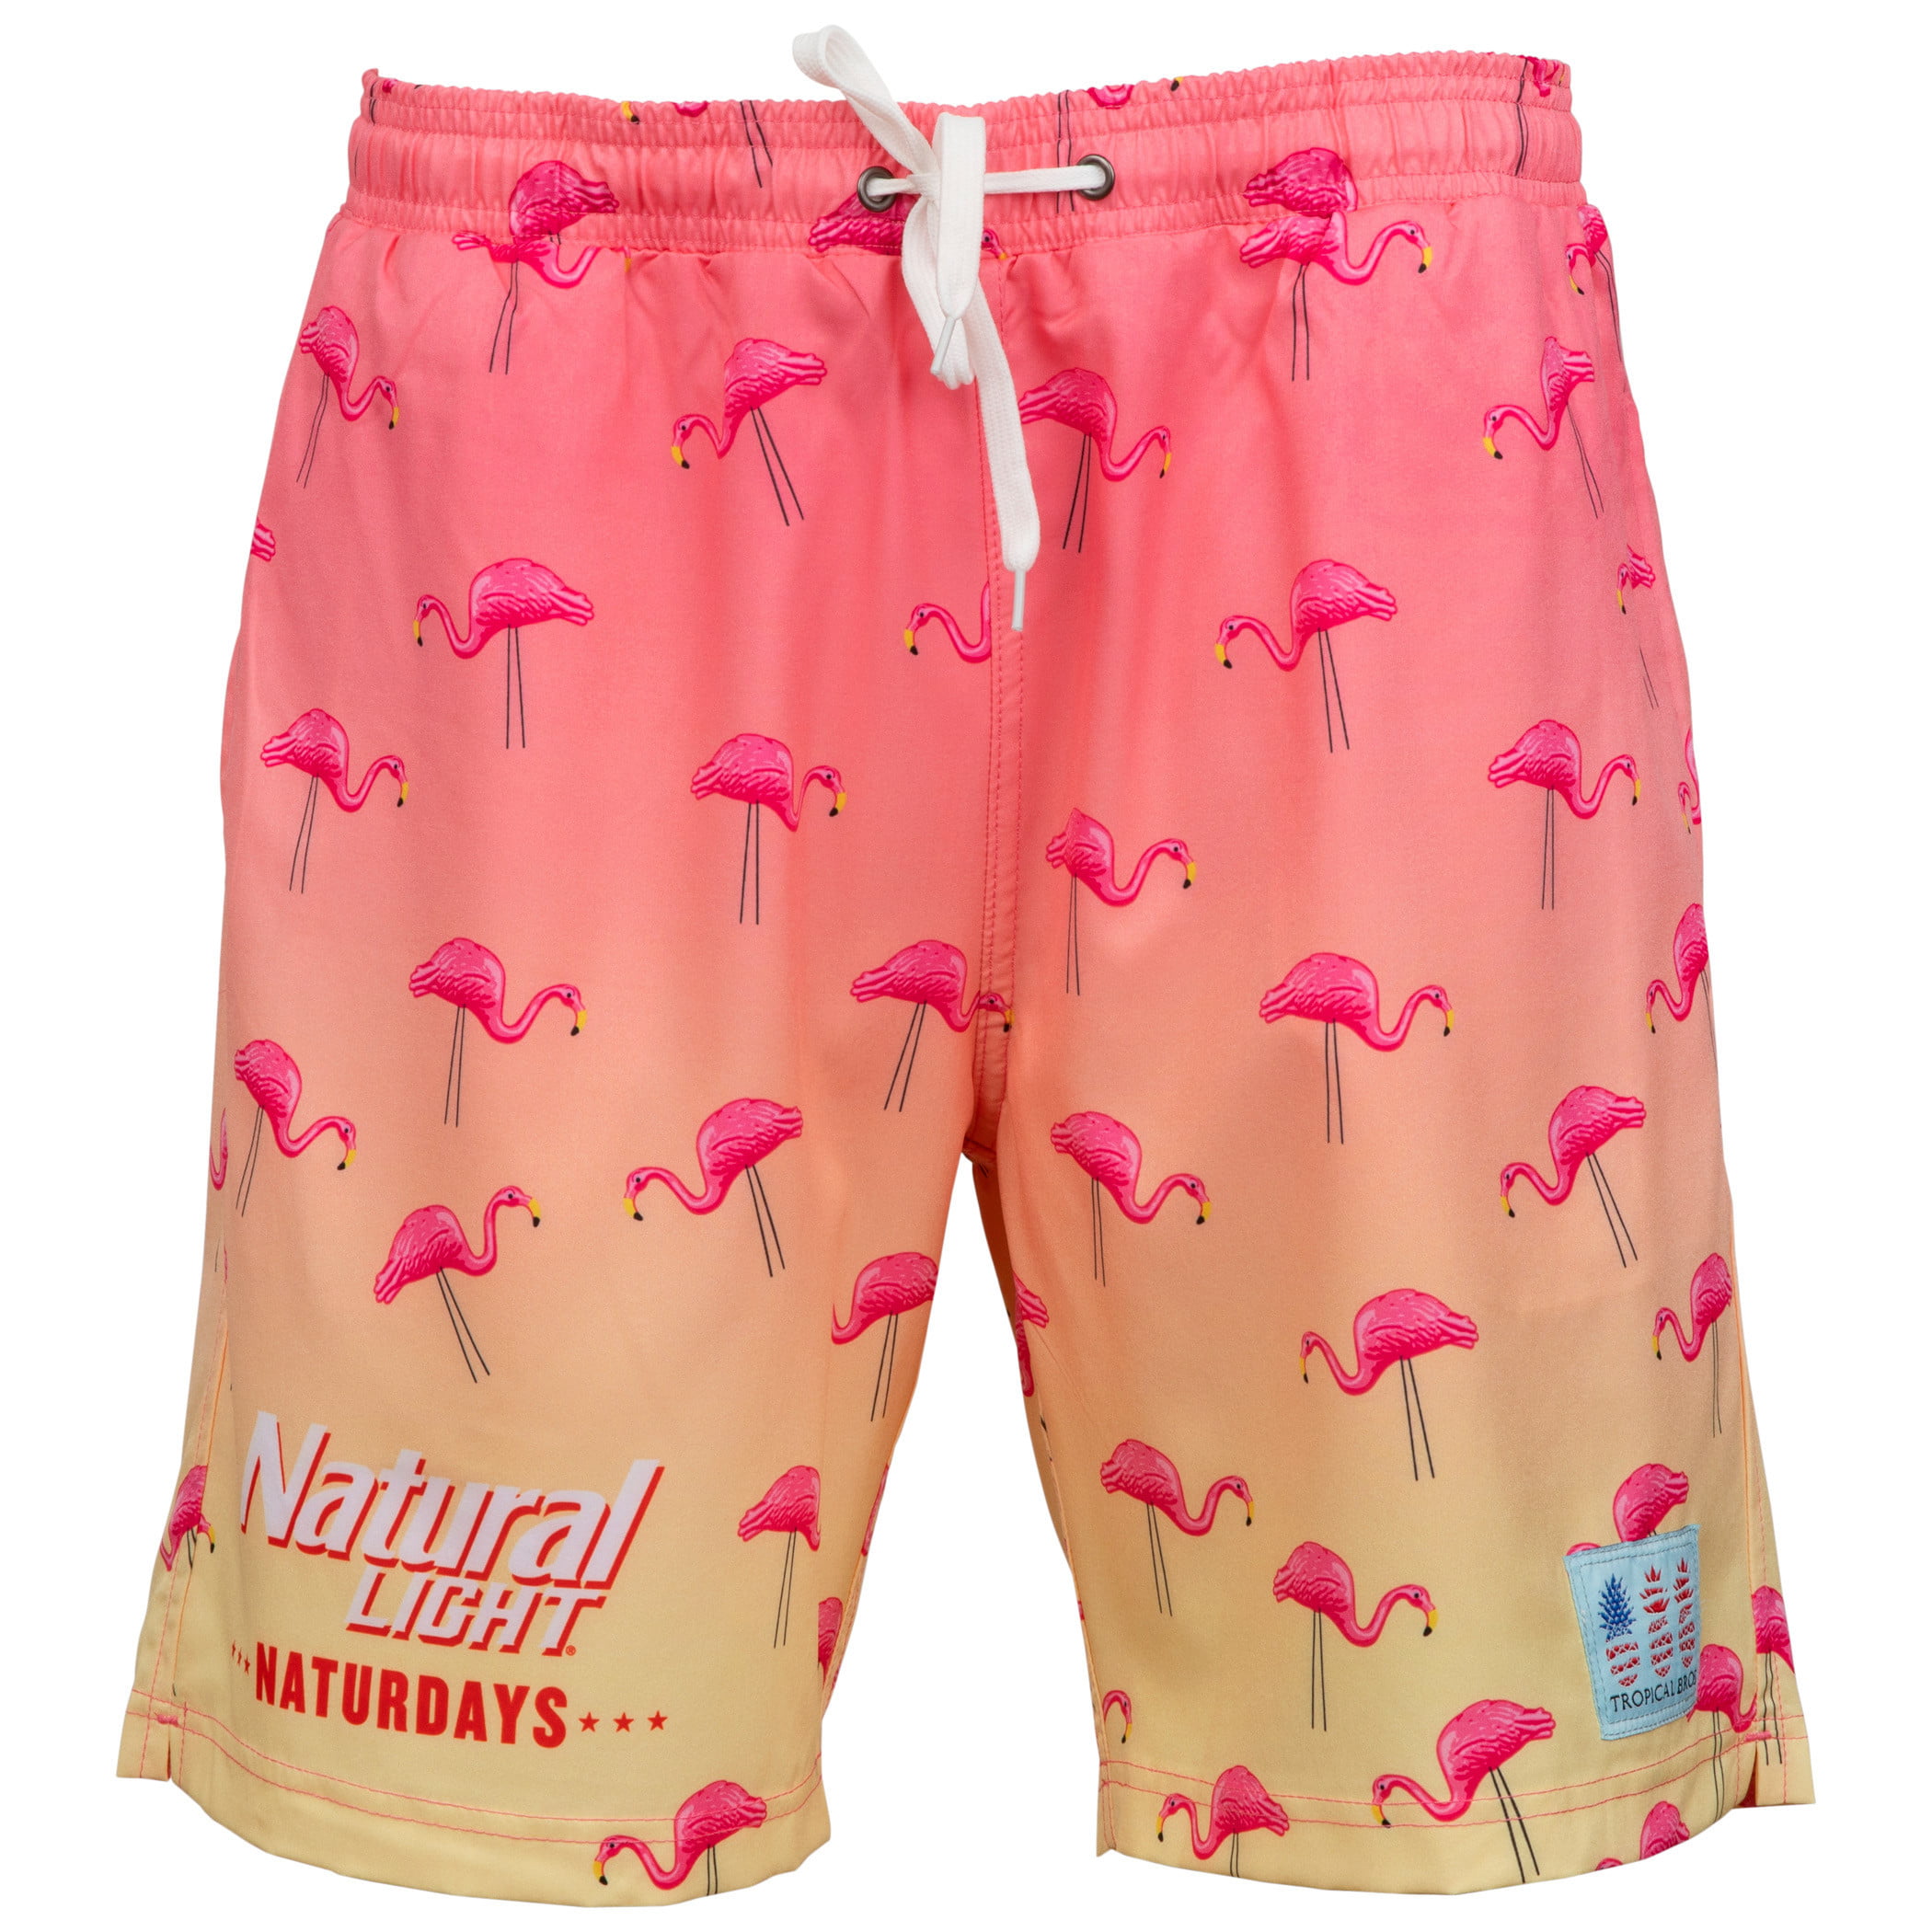 Summer Quick Dry Swimming Pants jdadaw Mens Beach Shorts Natural-Light-Naturdays-Strawberry 